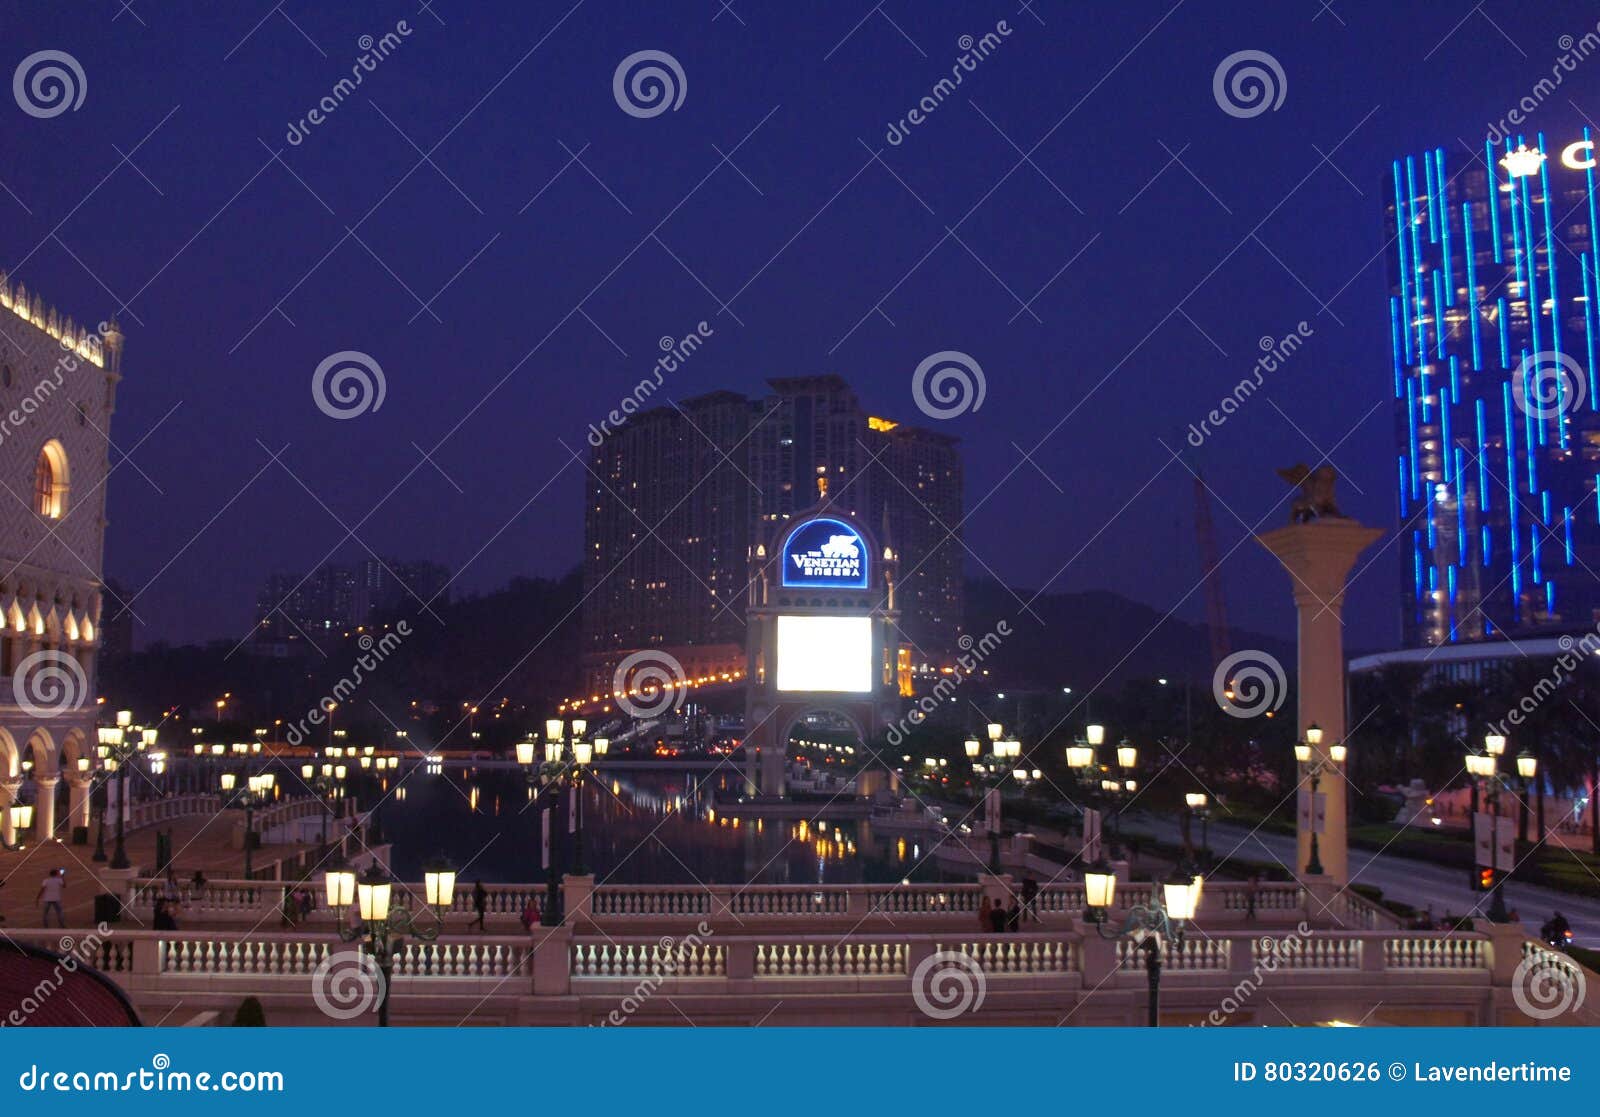 Macau Casino Resorts And Casino Under Construction In Macau By